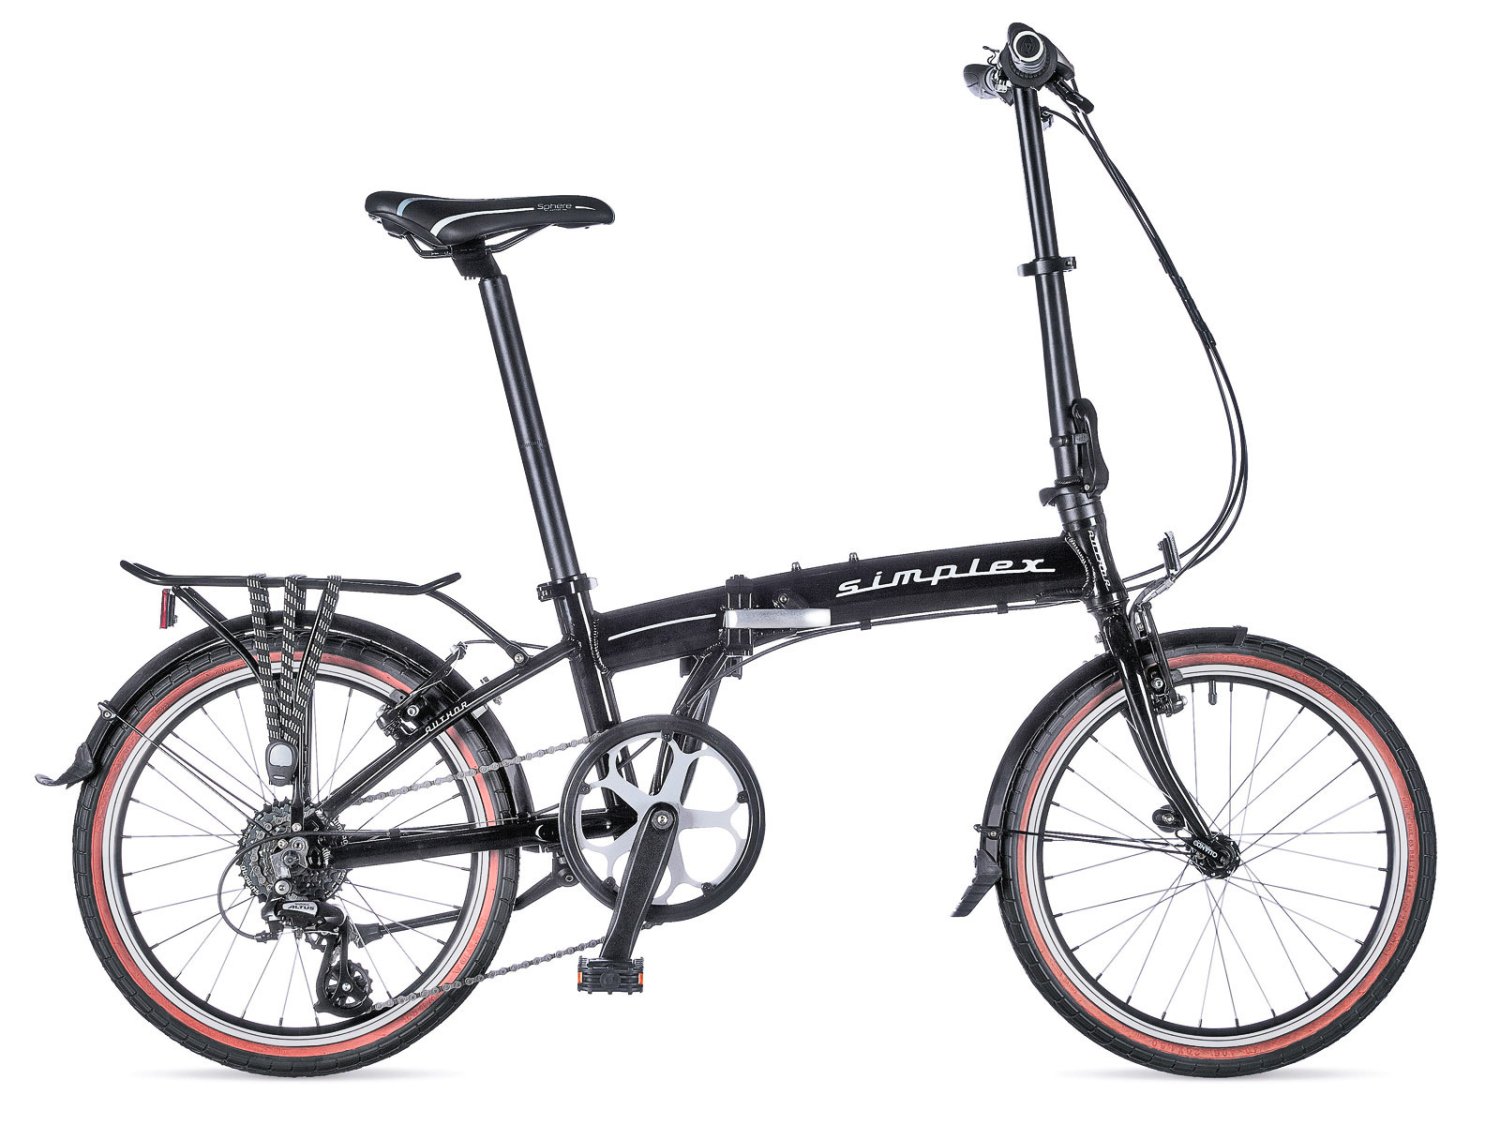 Рама велосипедная AUTHOR, алюминиевая, складная, с замком, для Simplex 2015, черная, 8-2015001 рама складная avenger h2006